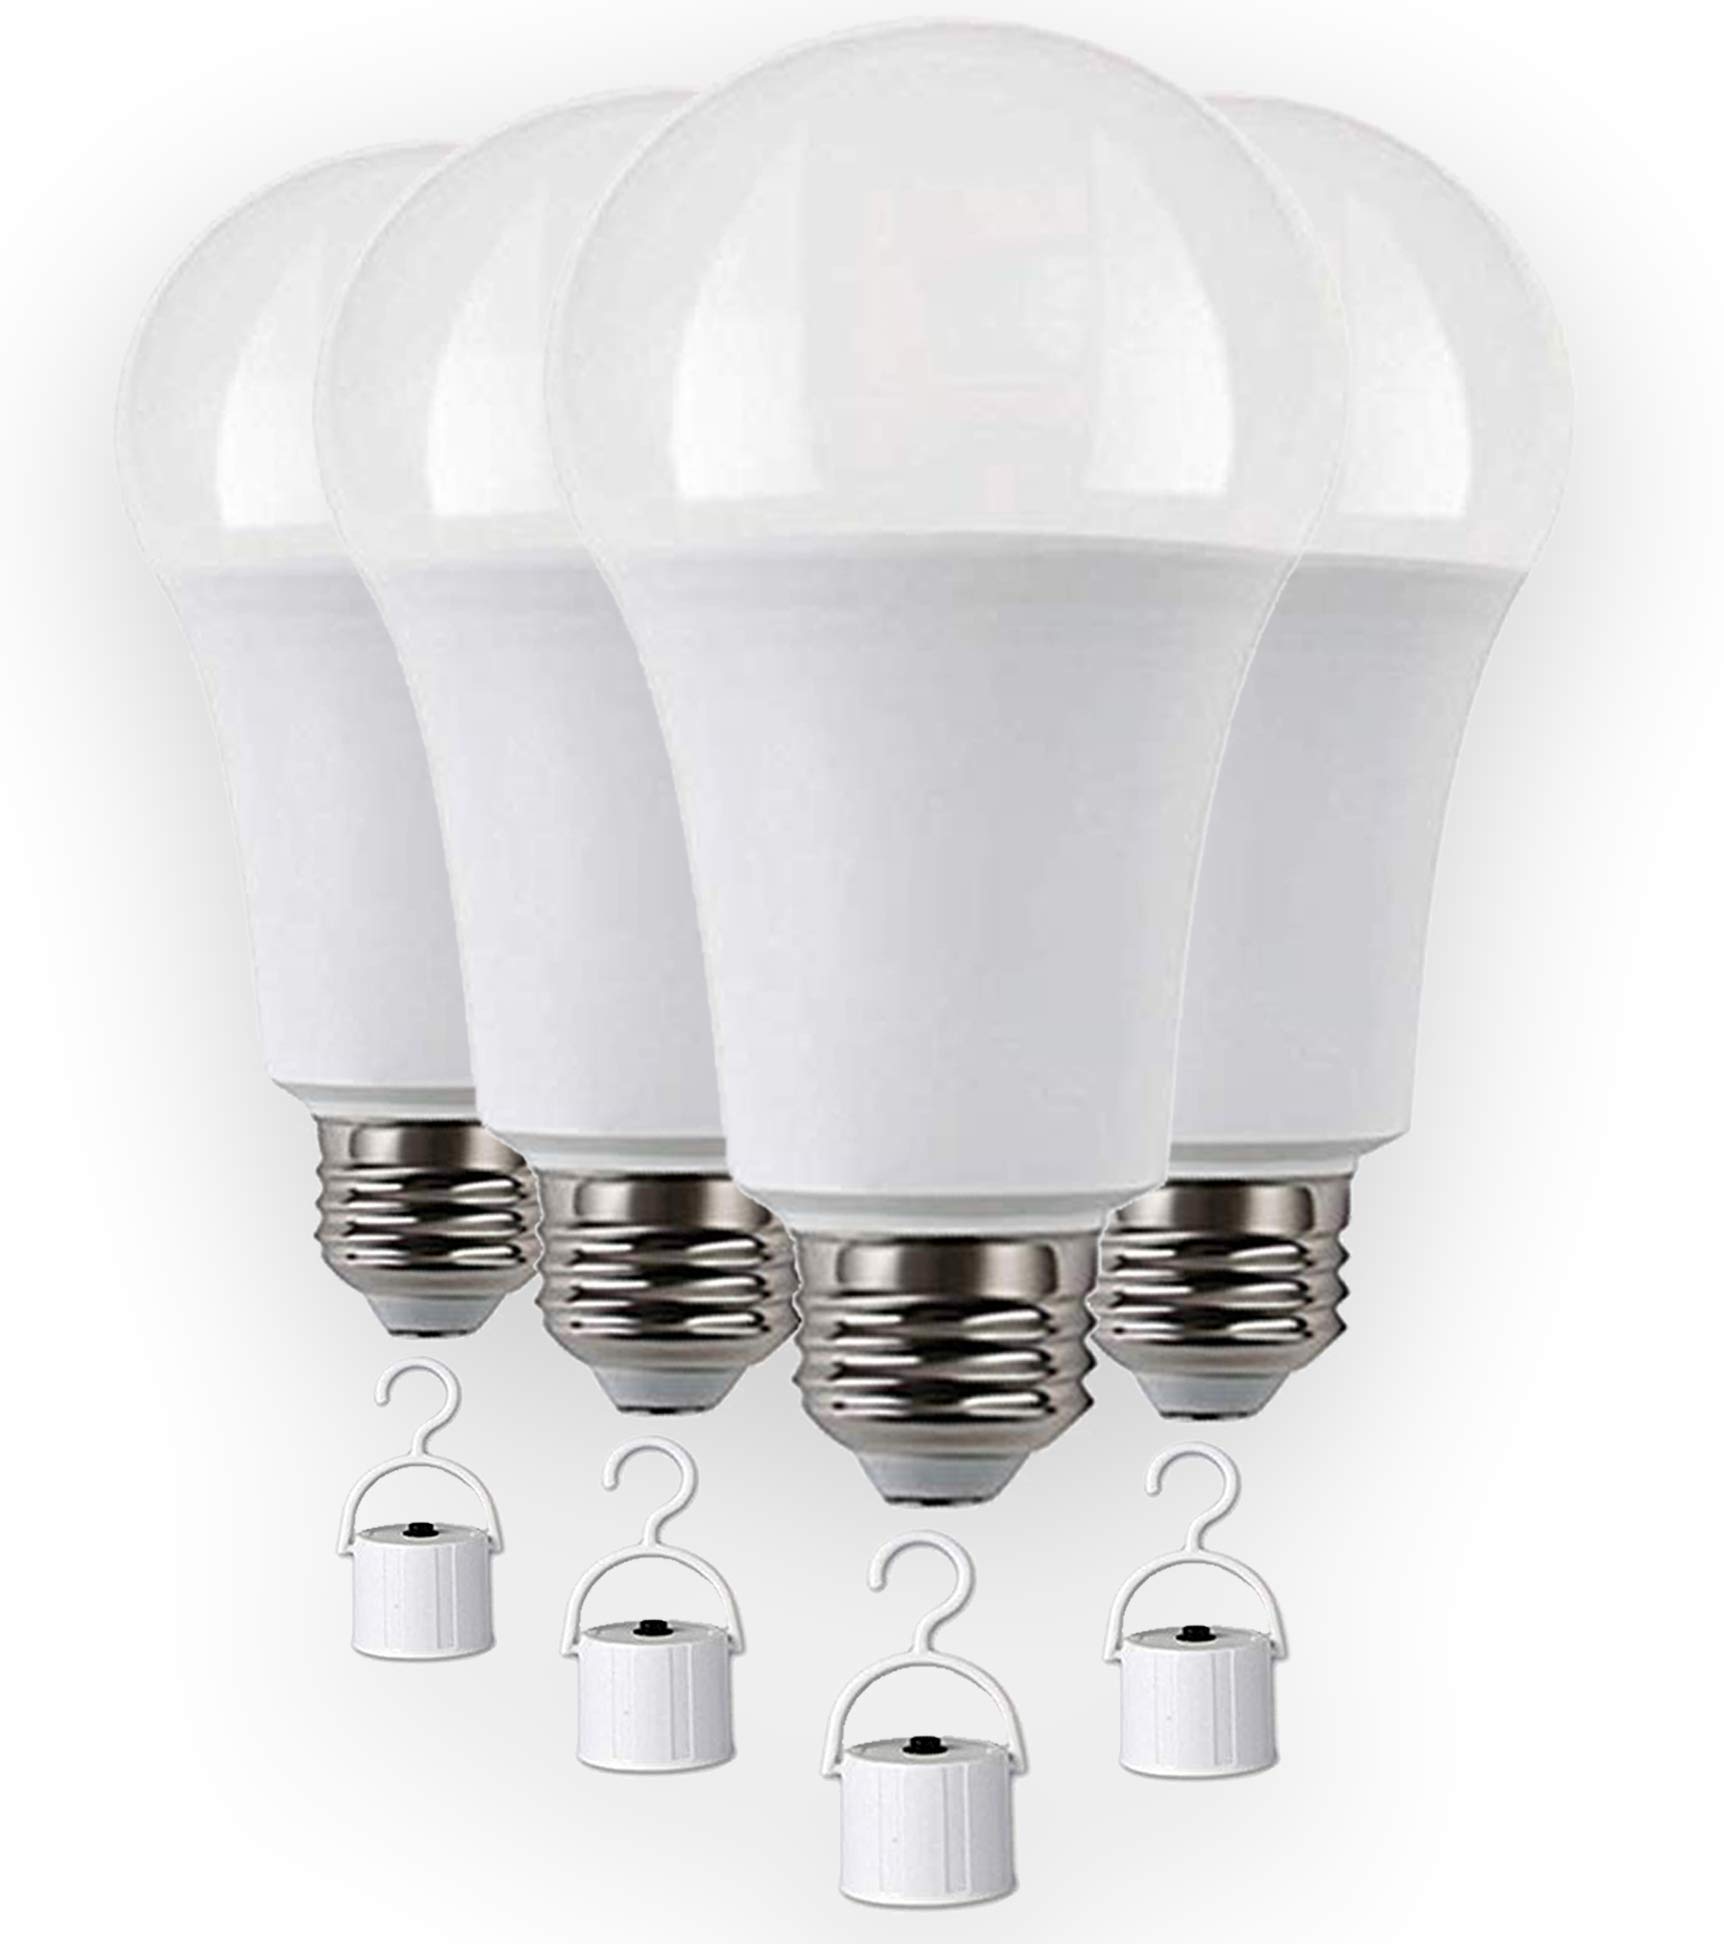 Laborate Lighting 9-Watt Warm White LED Emergency Light Bulb, 4 Count, 120V AC, 850 Lumens, Battery Backup, Long Lifespan